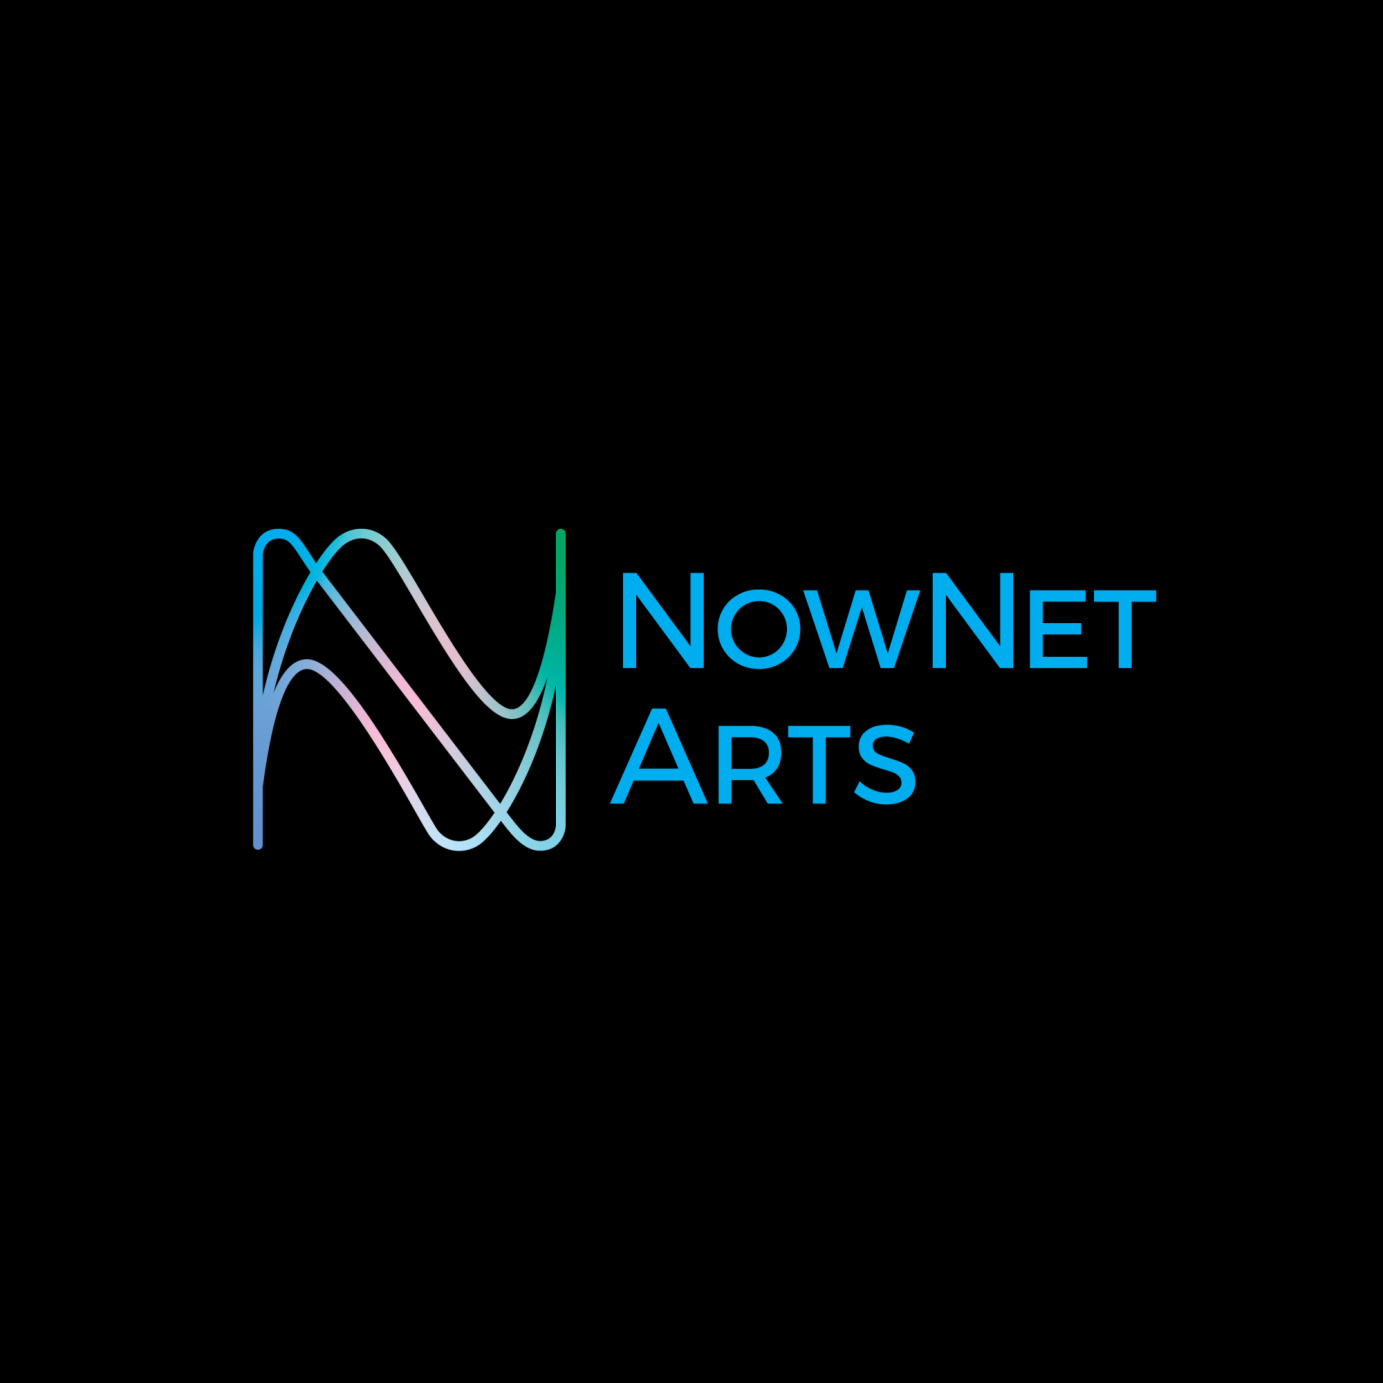 NowNet Arts brand identity